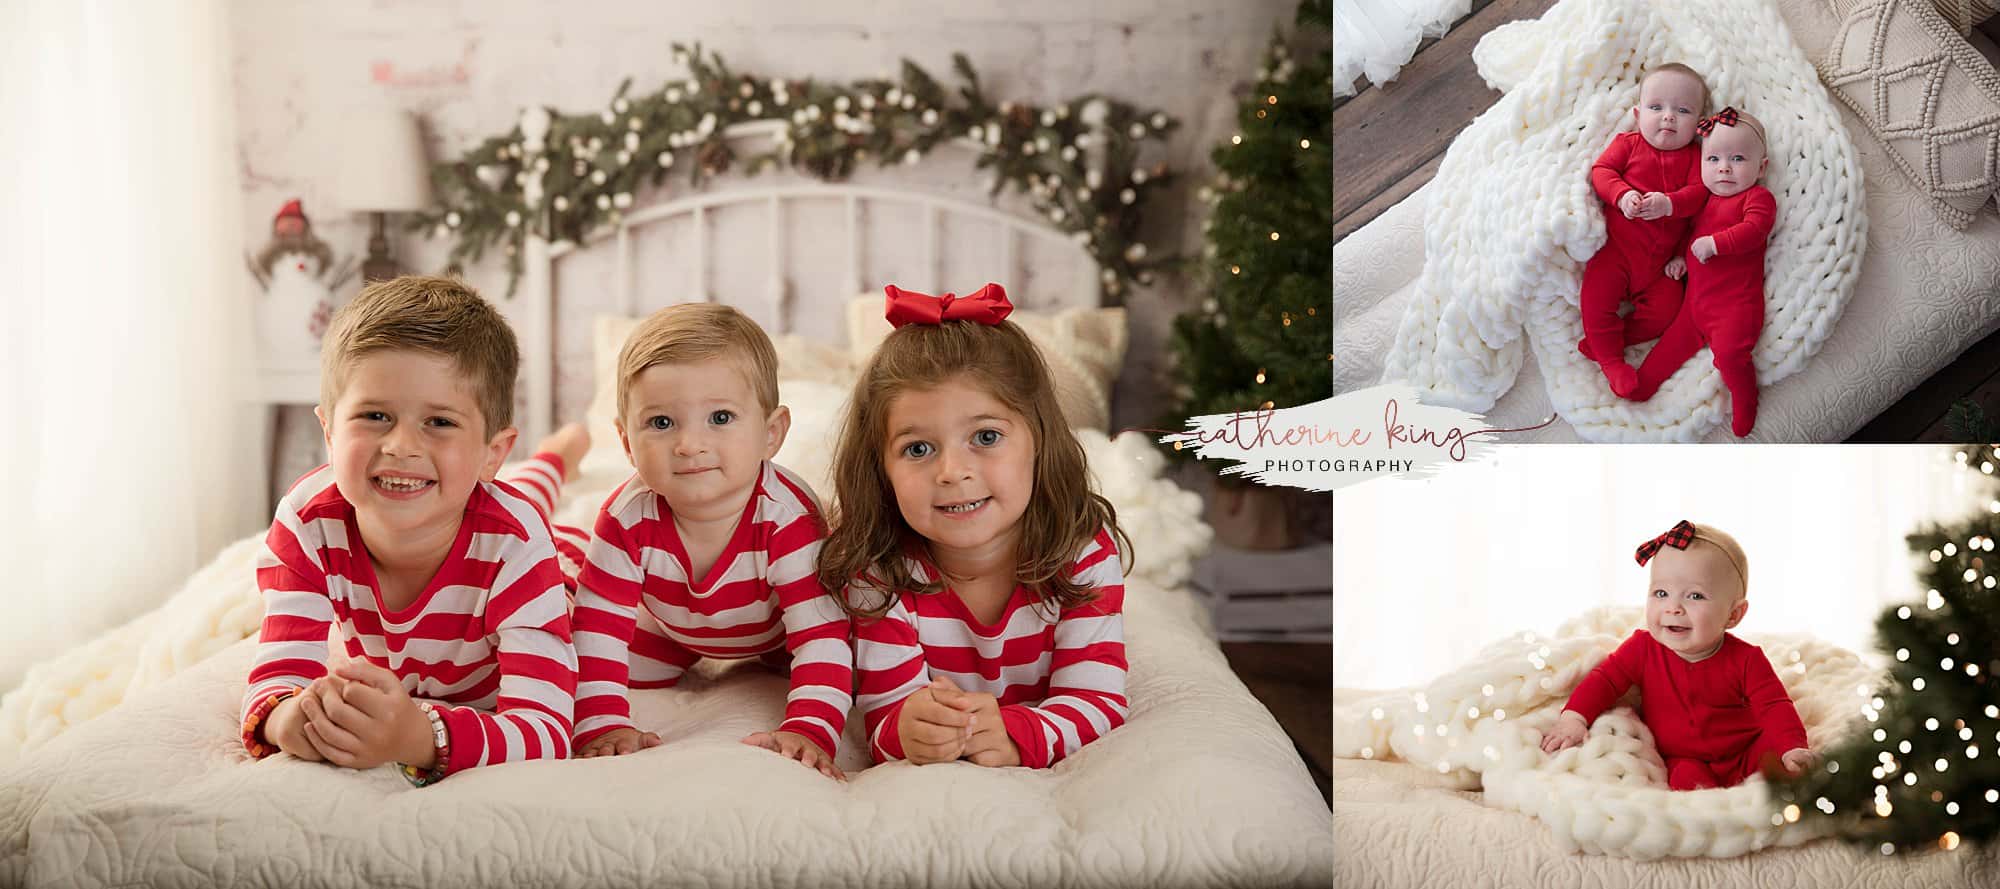 Holiday Pajamas For Your Christmas Card Photos